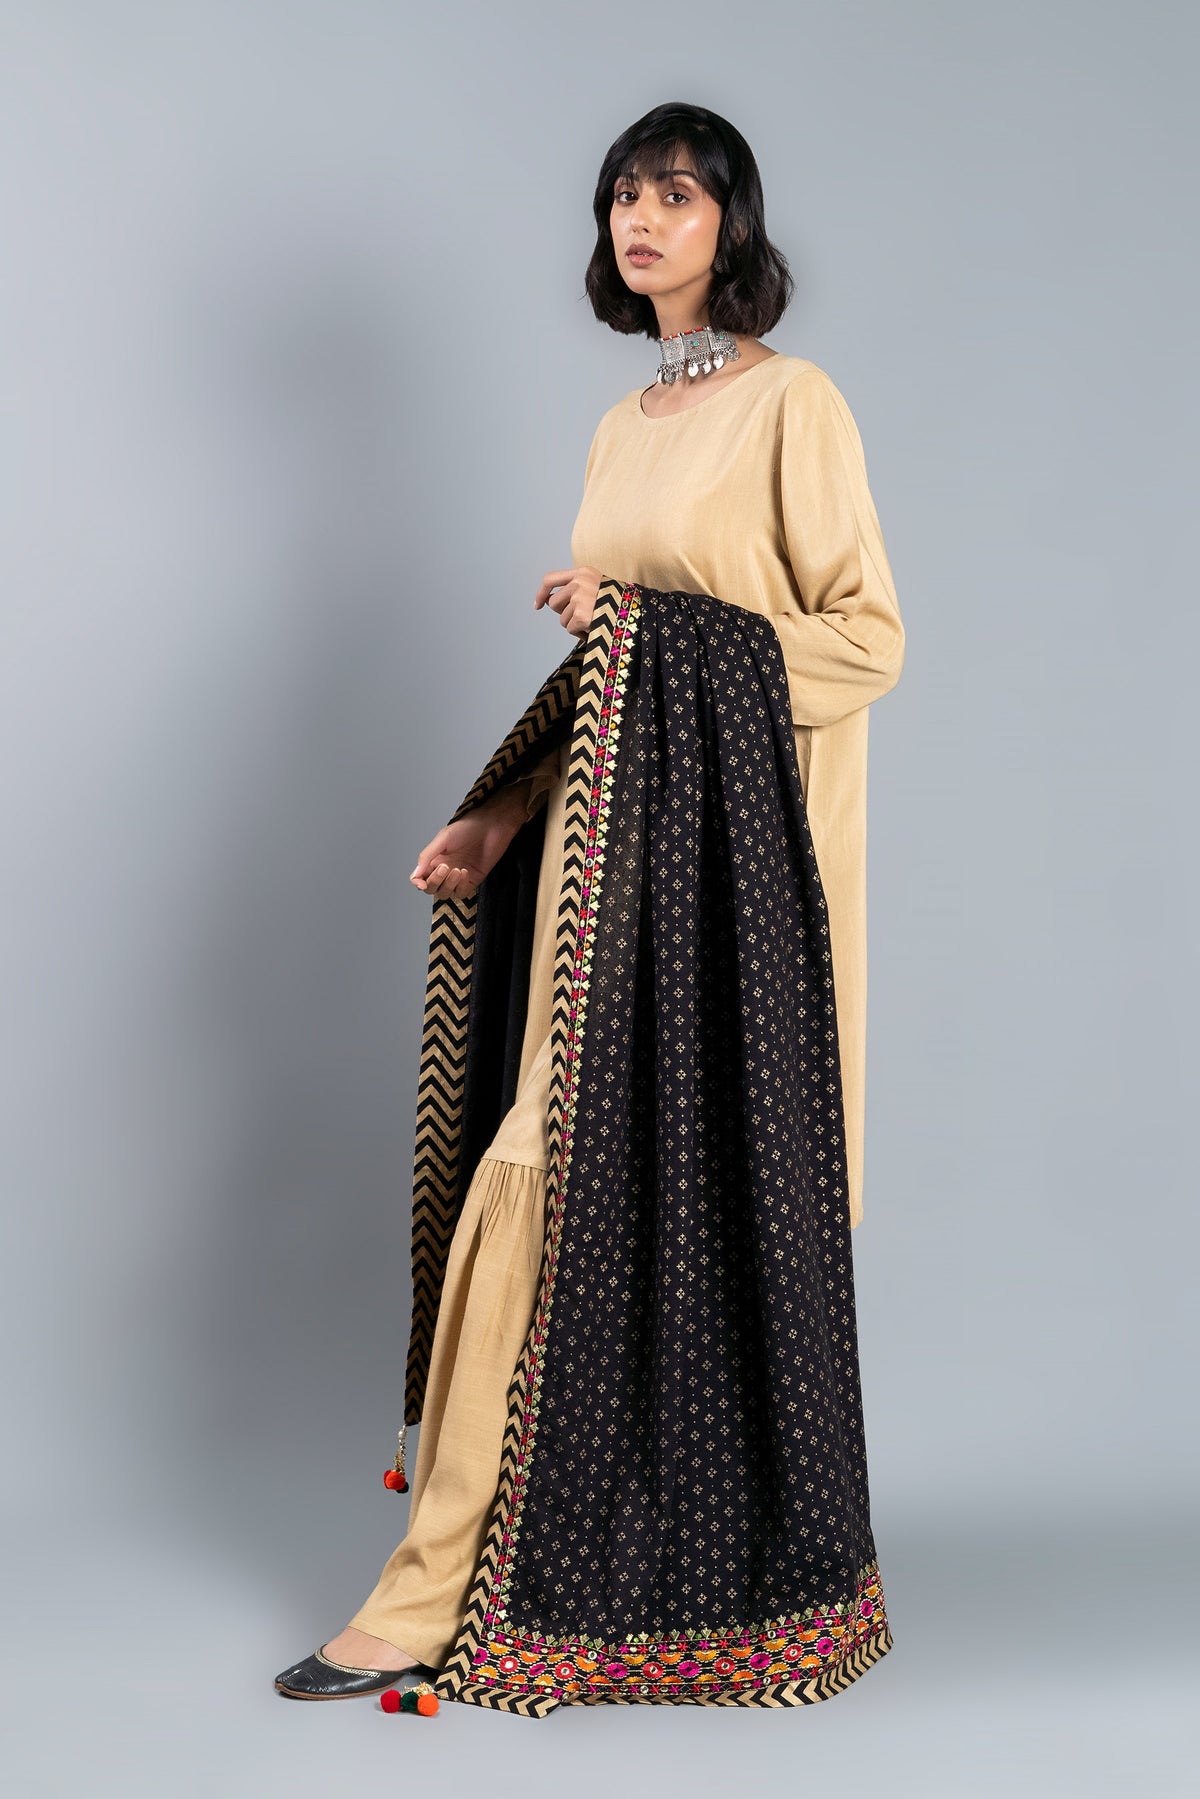 Stitch Shawl in Black coloured Lawn Karandi fabric